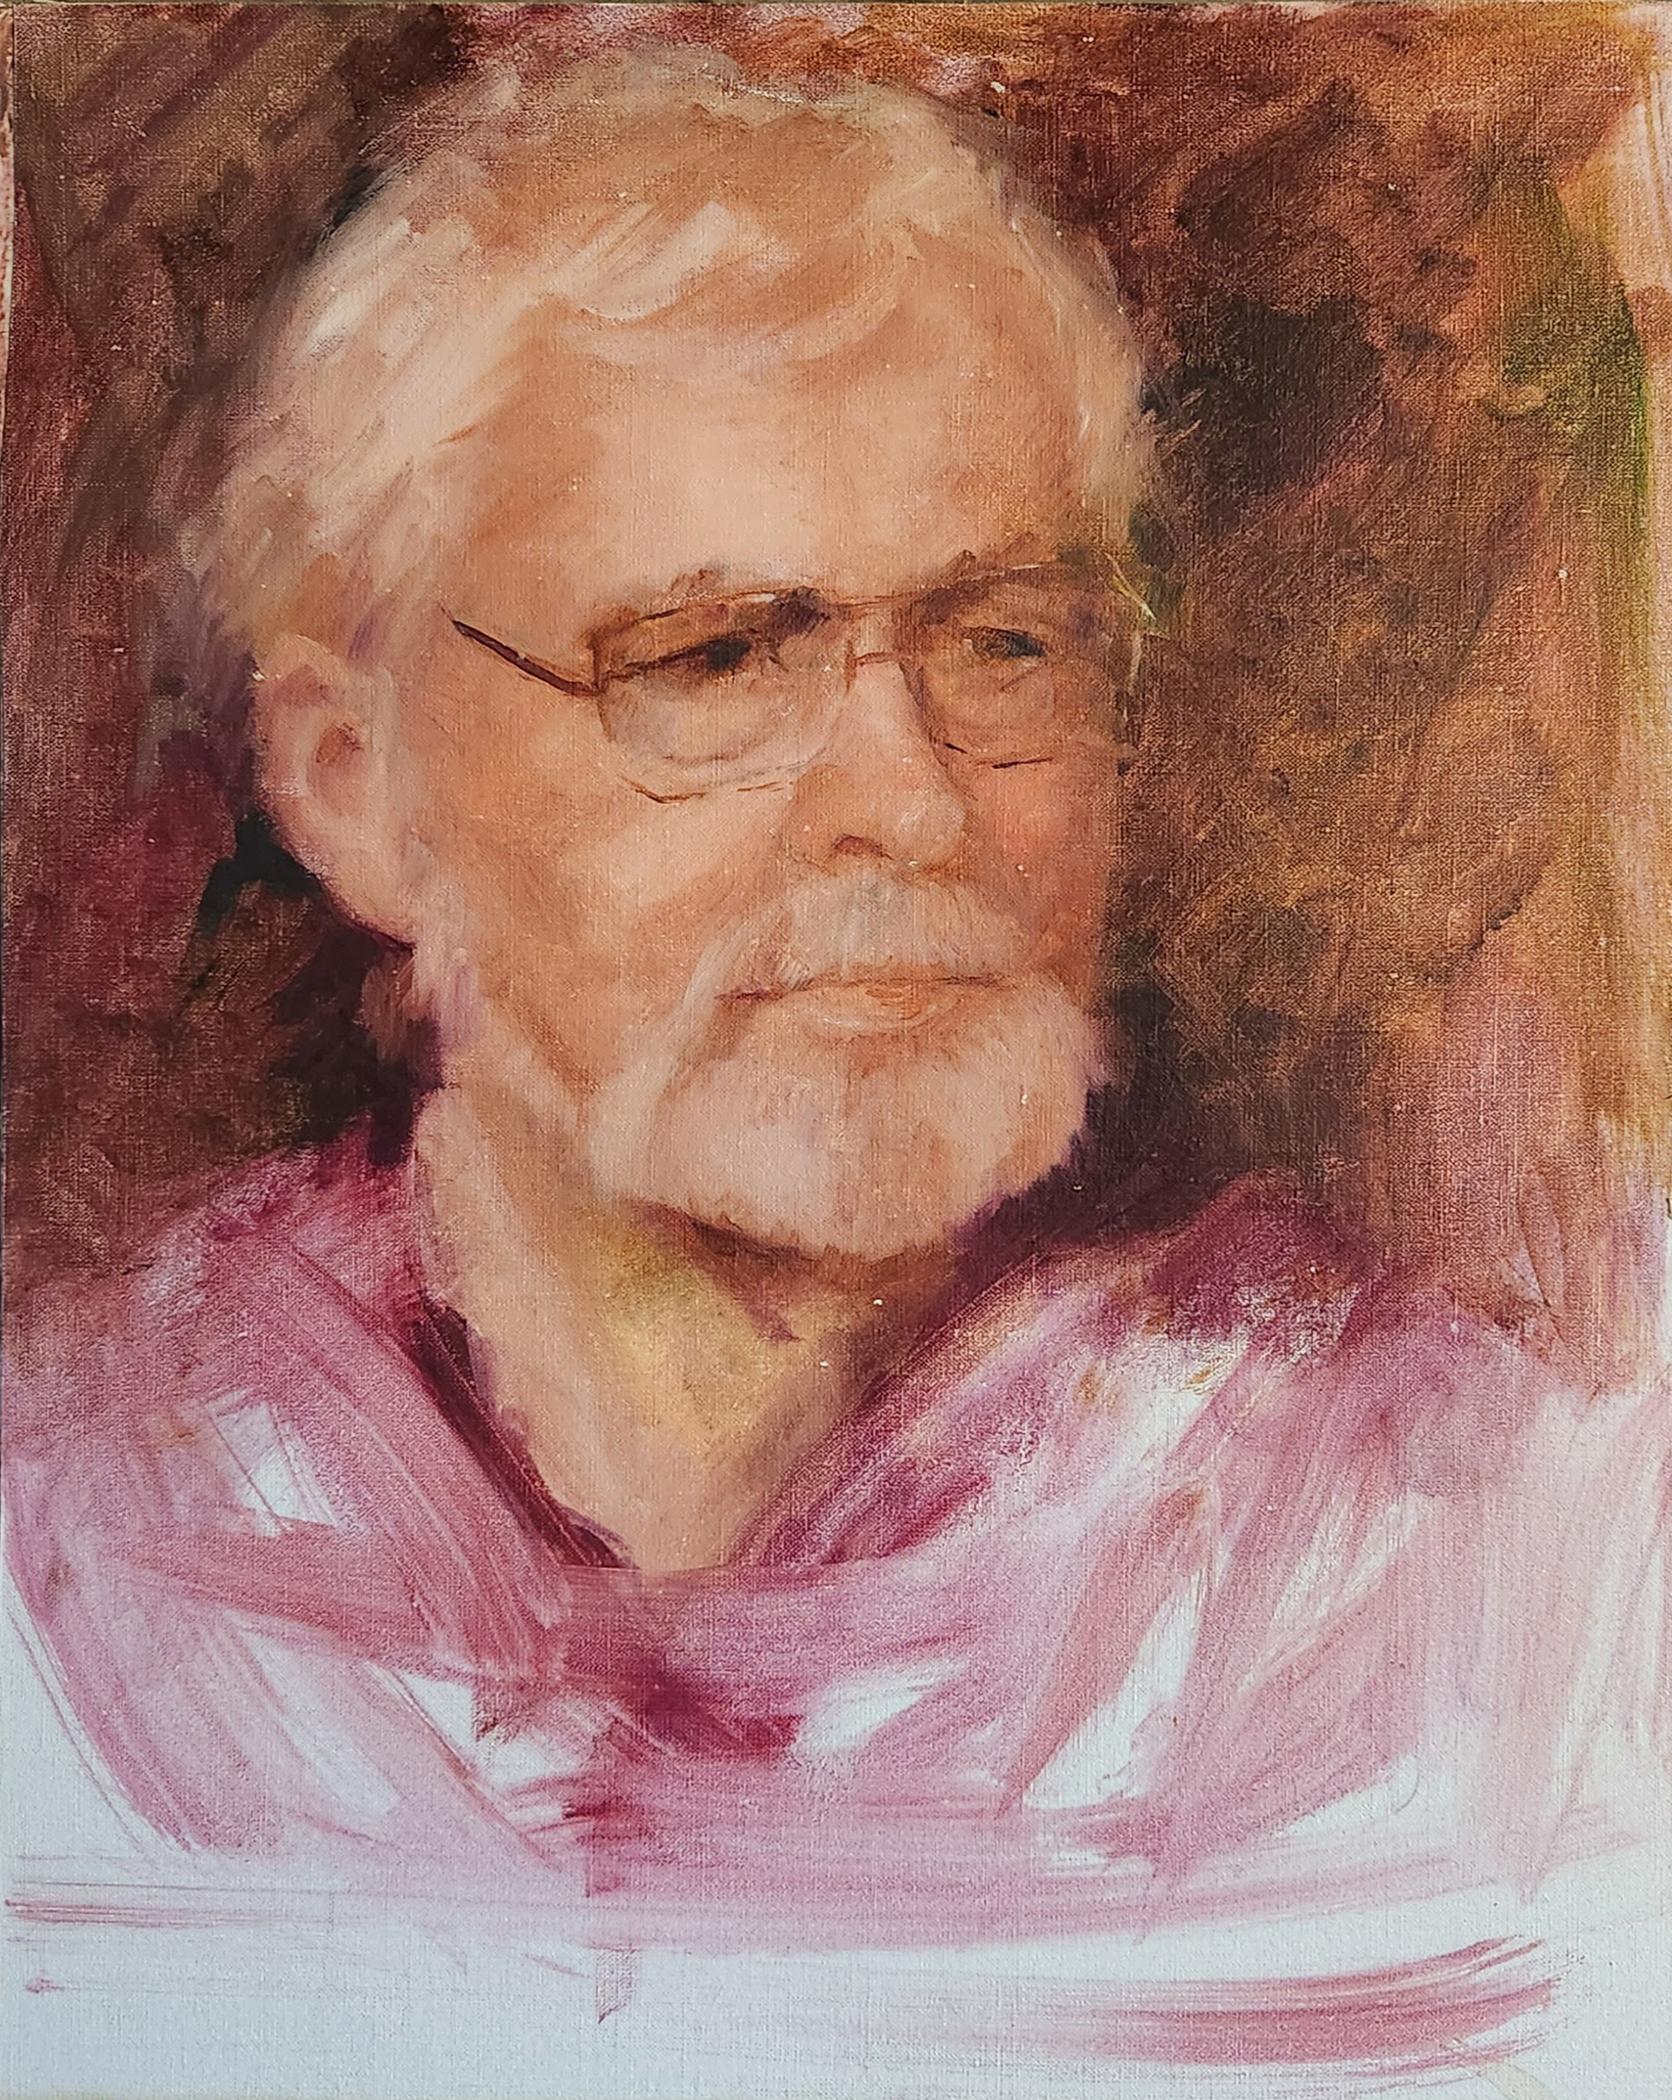 Lu Haskew Figurative Painting - Charles Cross Portrait, 16x12" oil on board